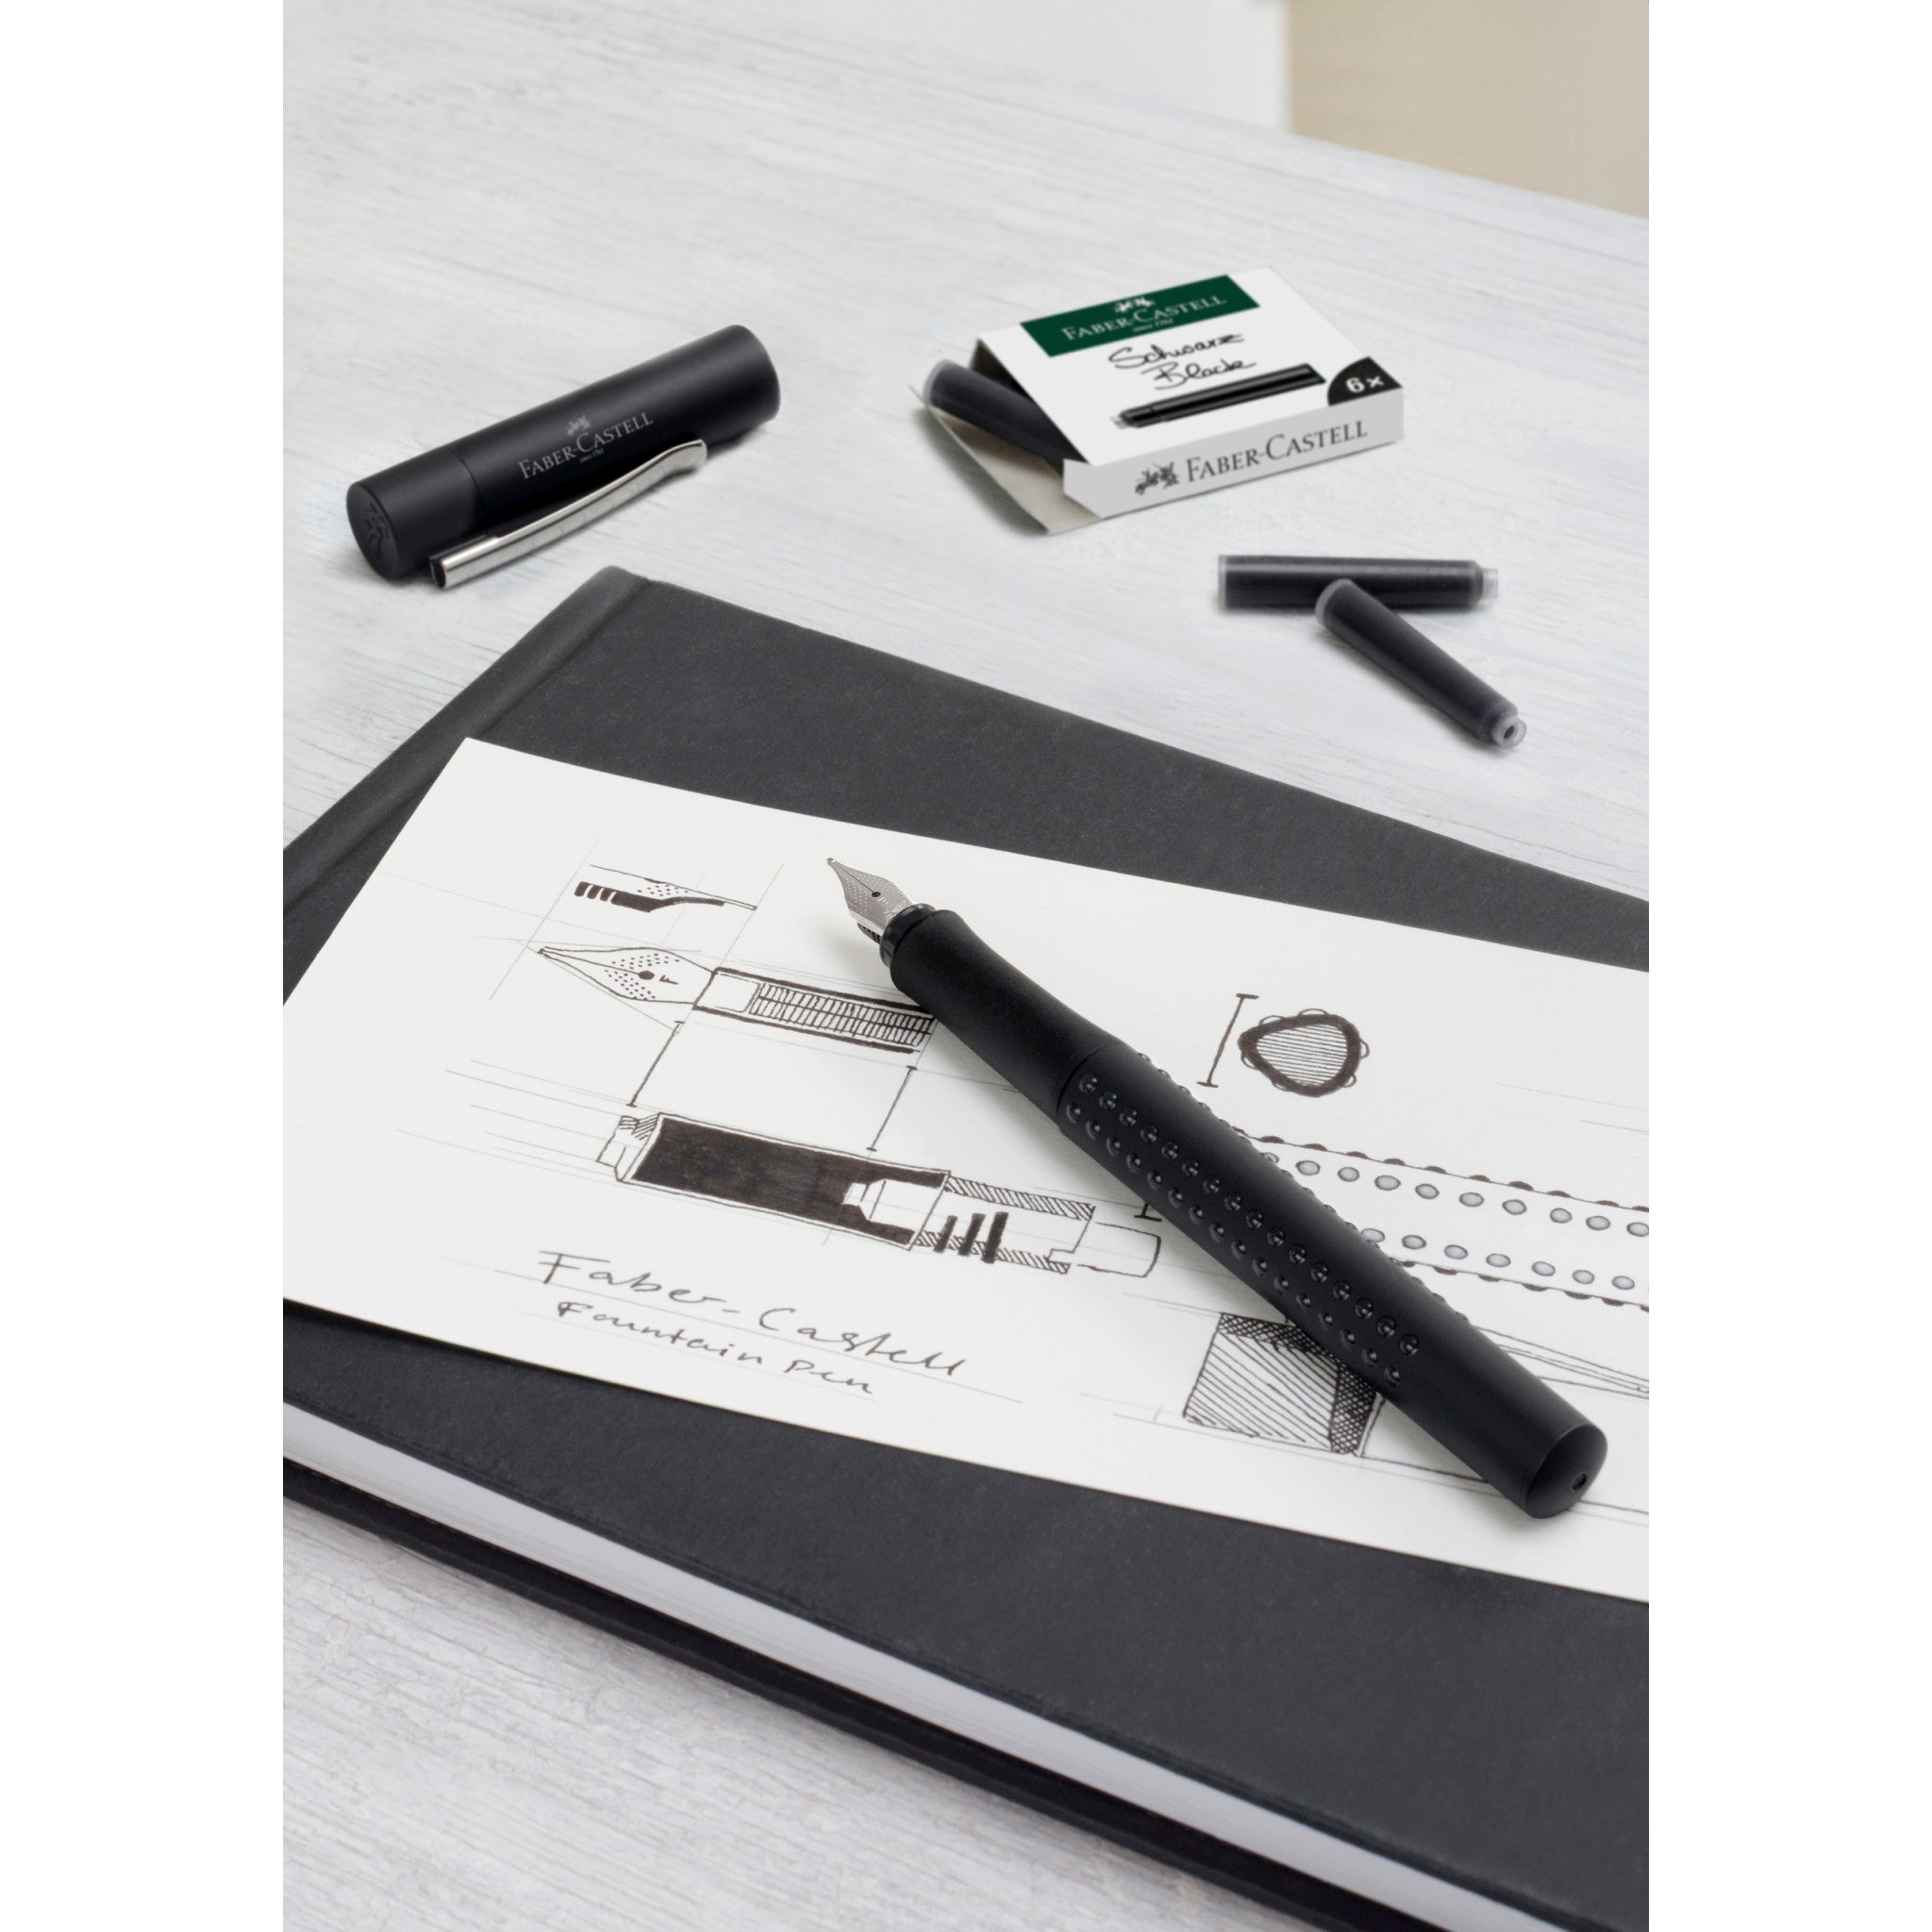 Faber-Castell Fine Point Pen Waterproof Ink Fountain Pen Use For